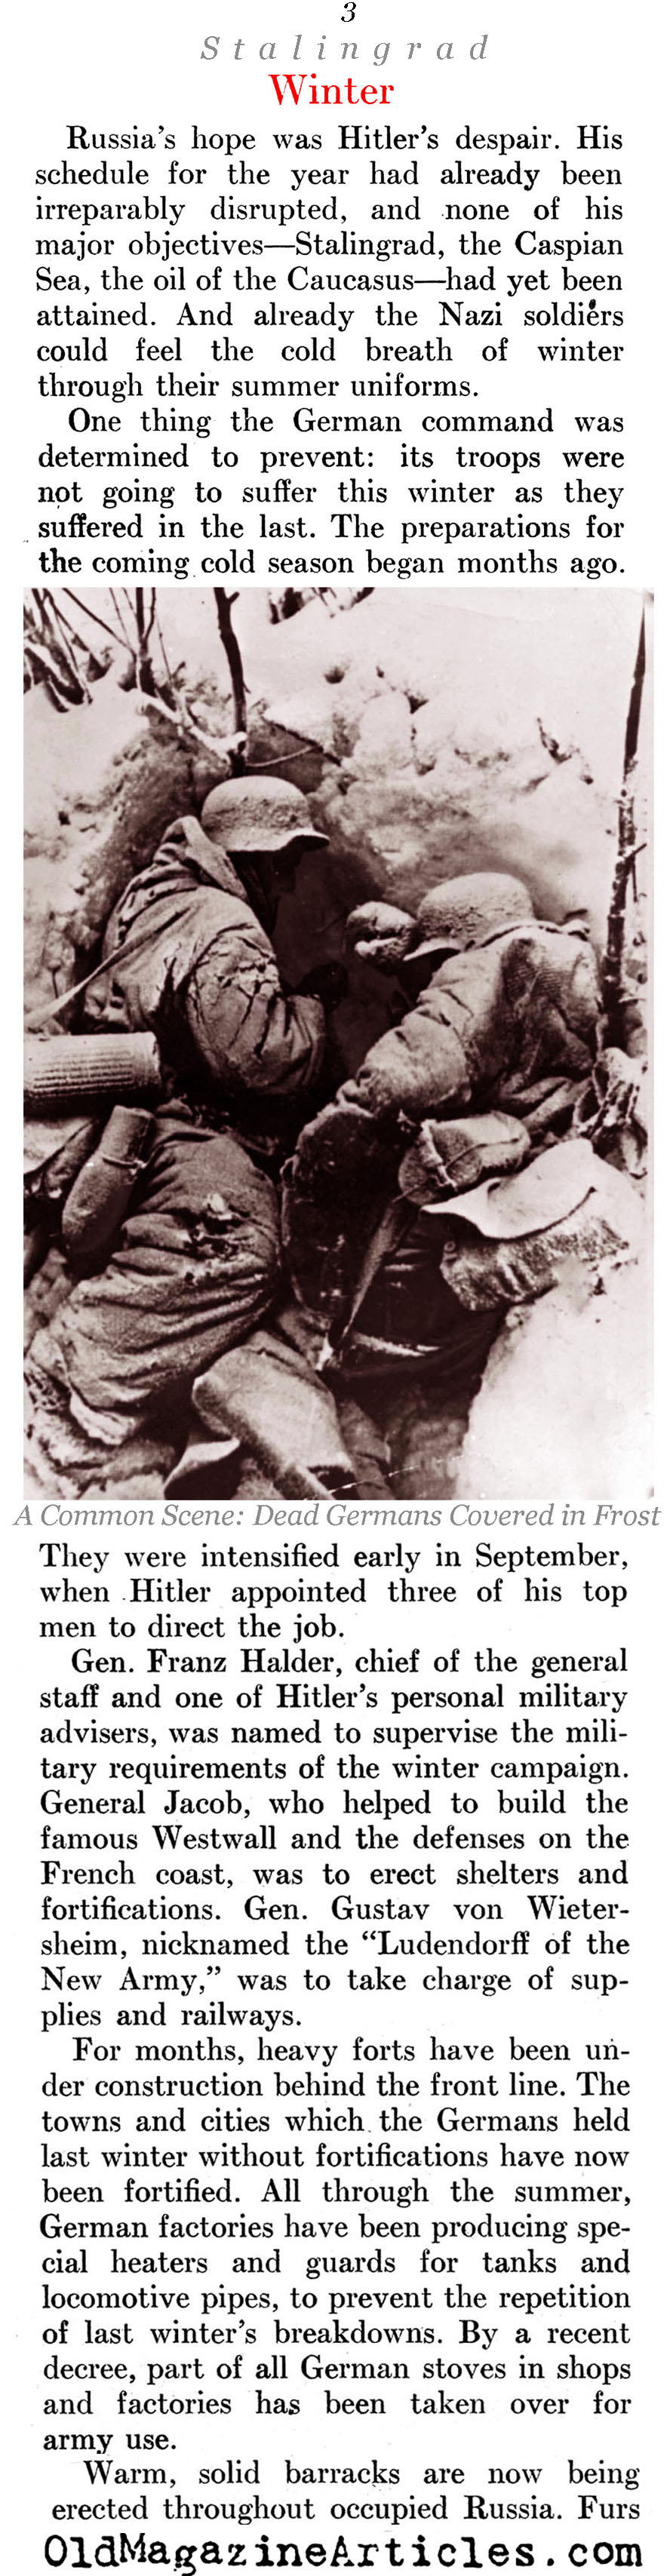 The Battle of Stalingrad (Newsweek Magazine, 1942)